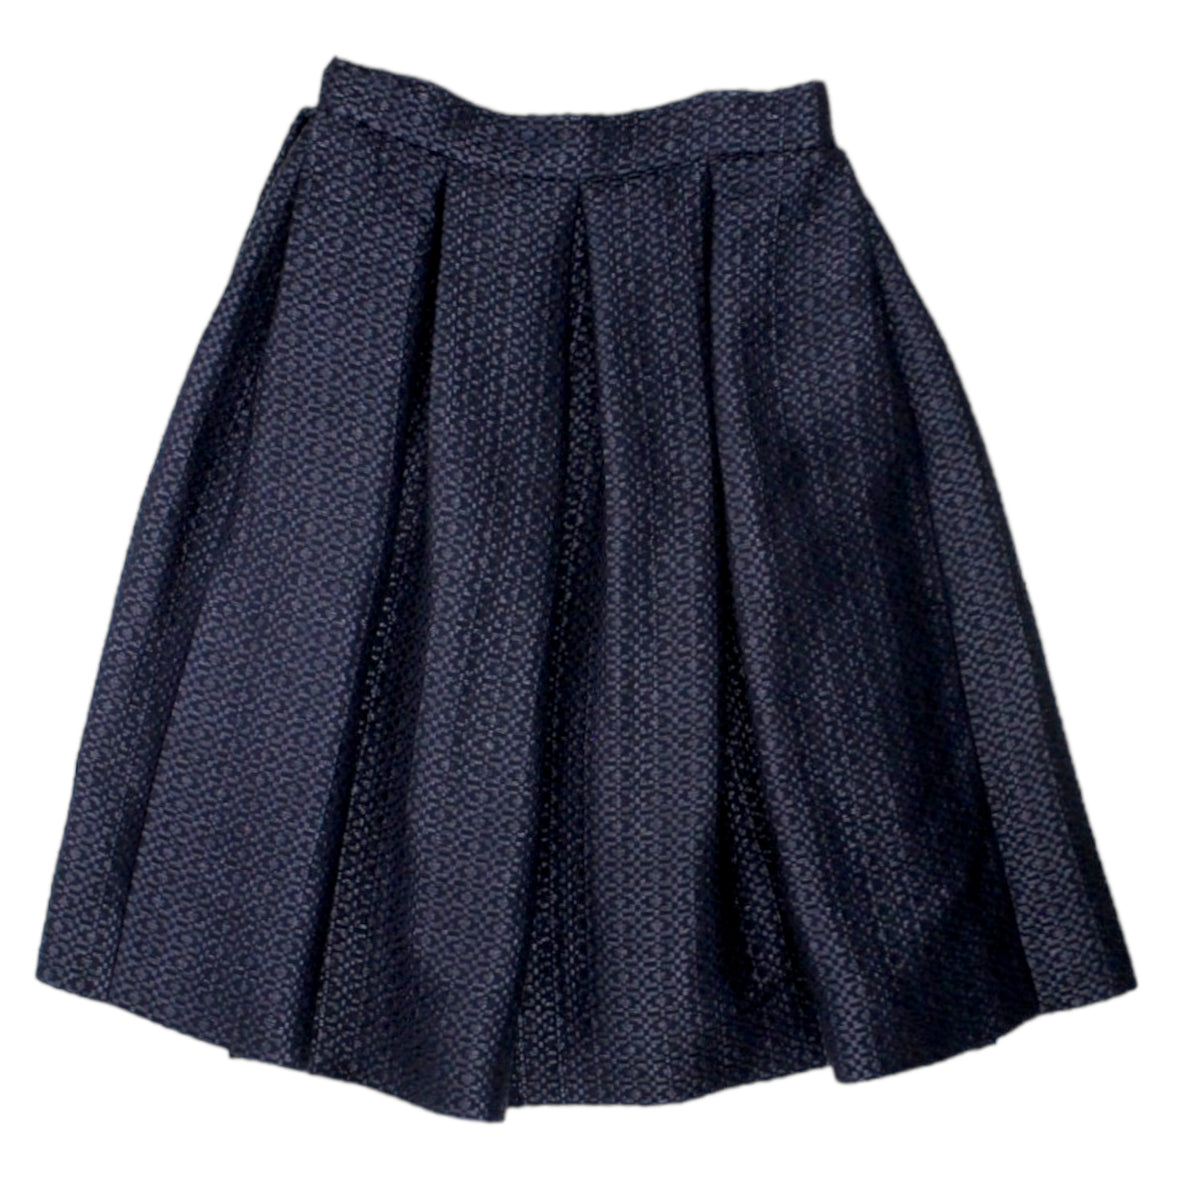 Orla Kiely Navy Brocade Pleated Skirt